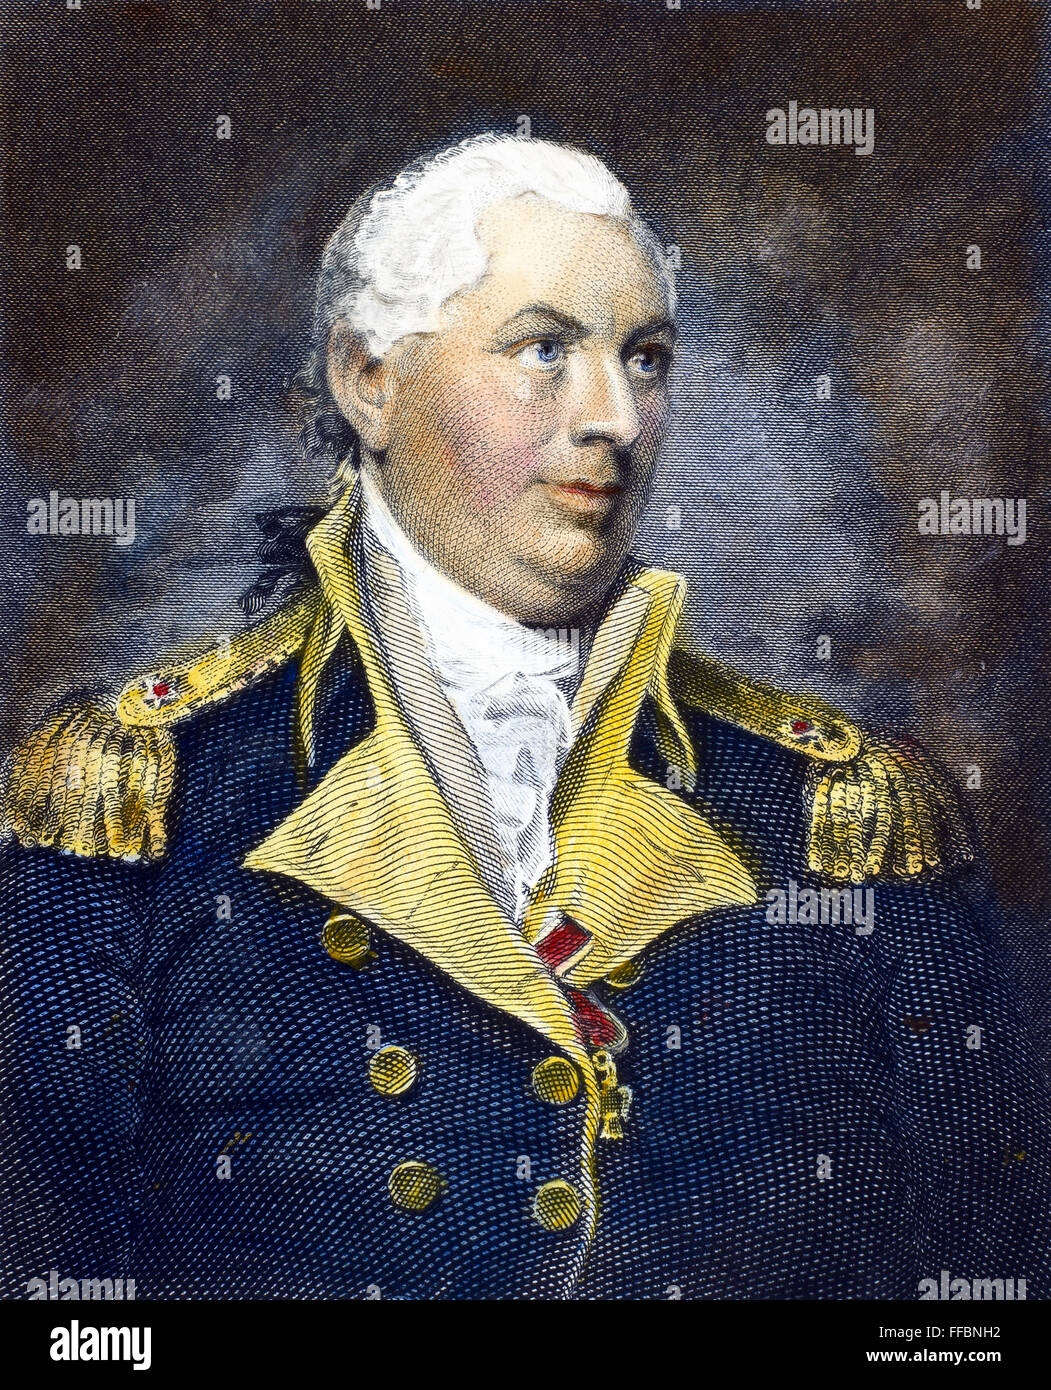 JOHN BARRY (1745-1803). /nAmerican (Irish-born) naval officer. Steel engraving, 19th century. Stock Photo